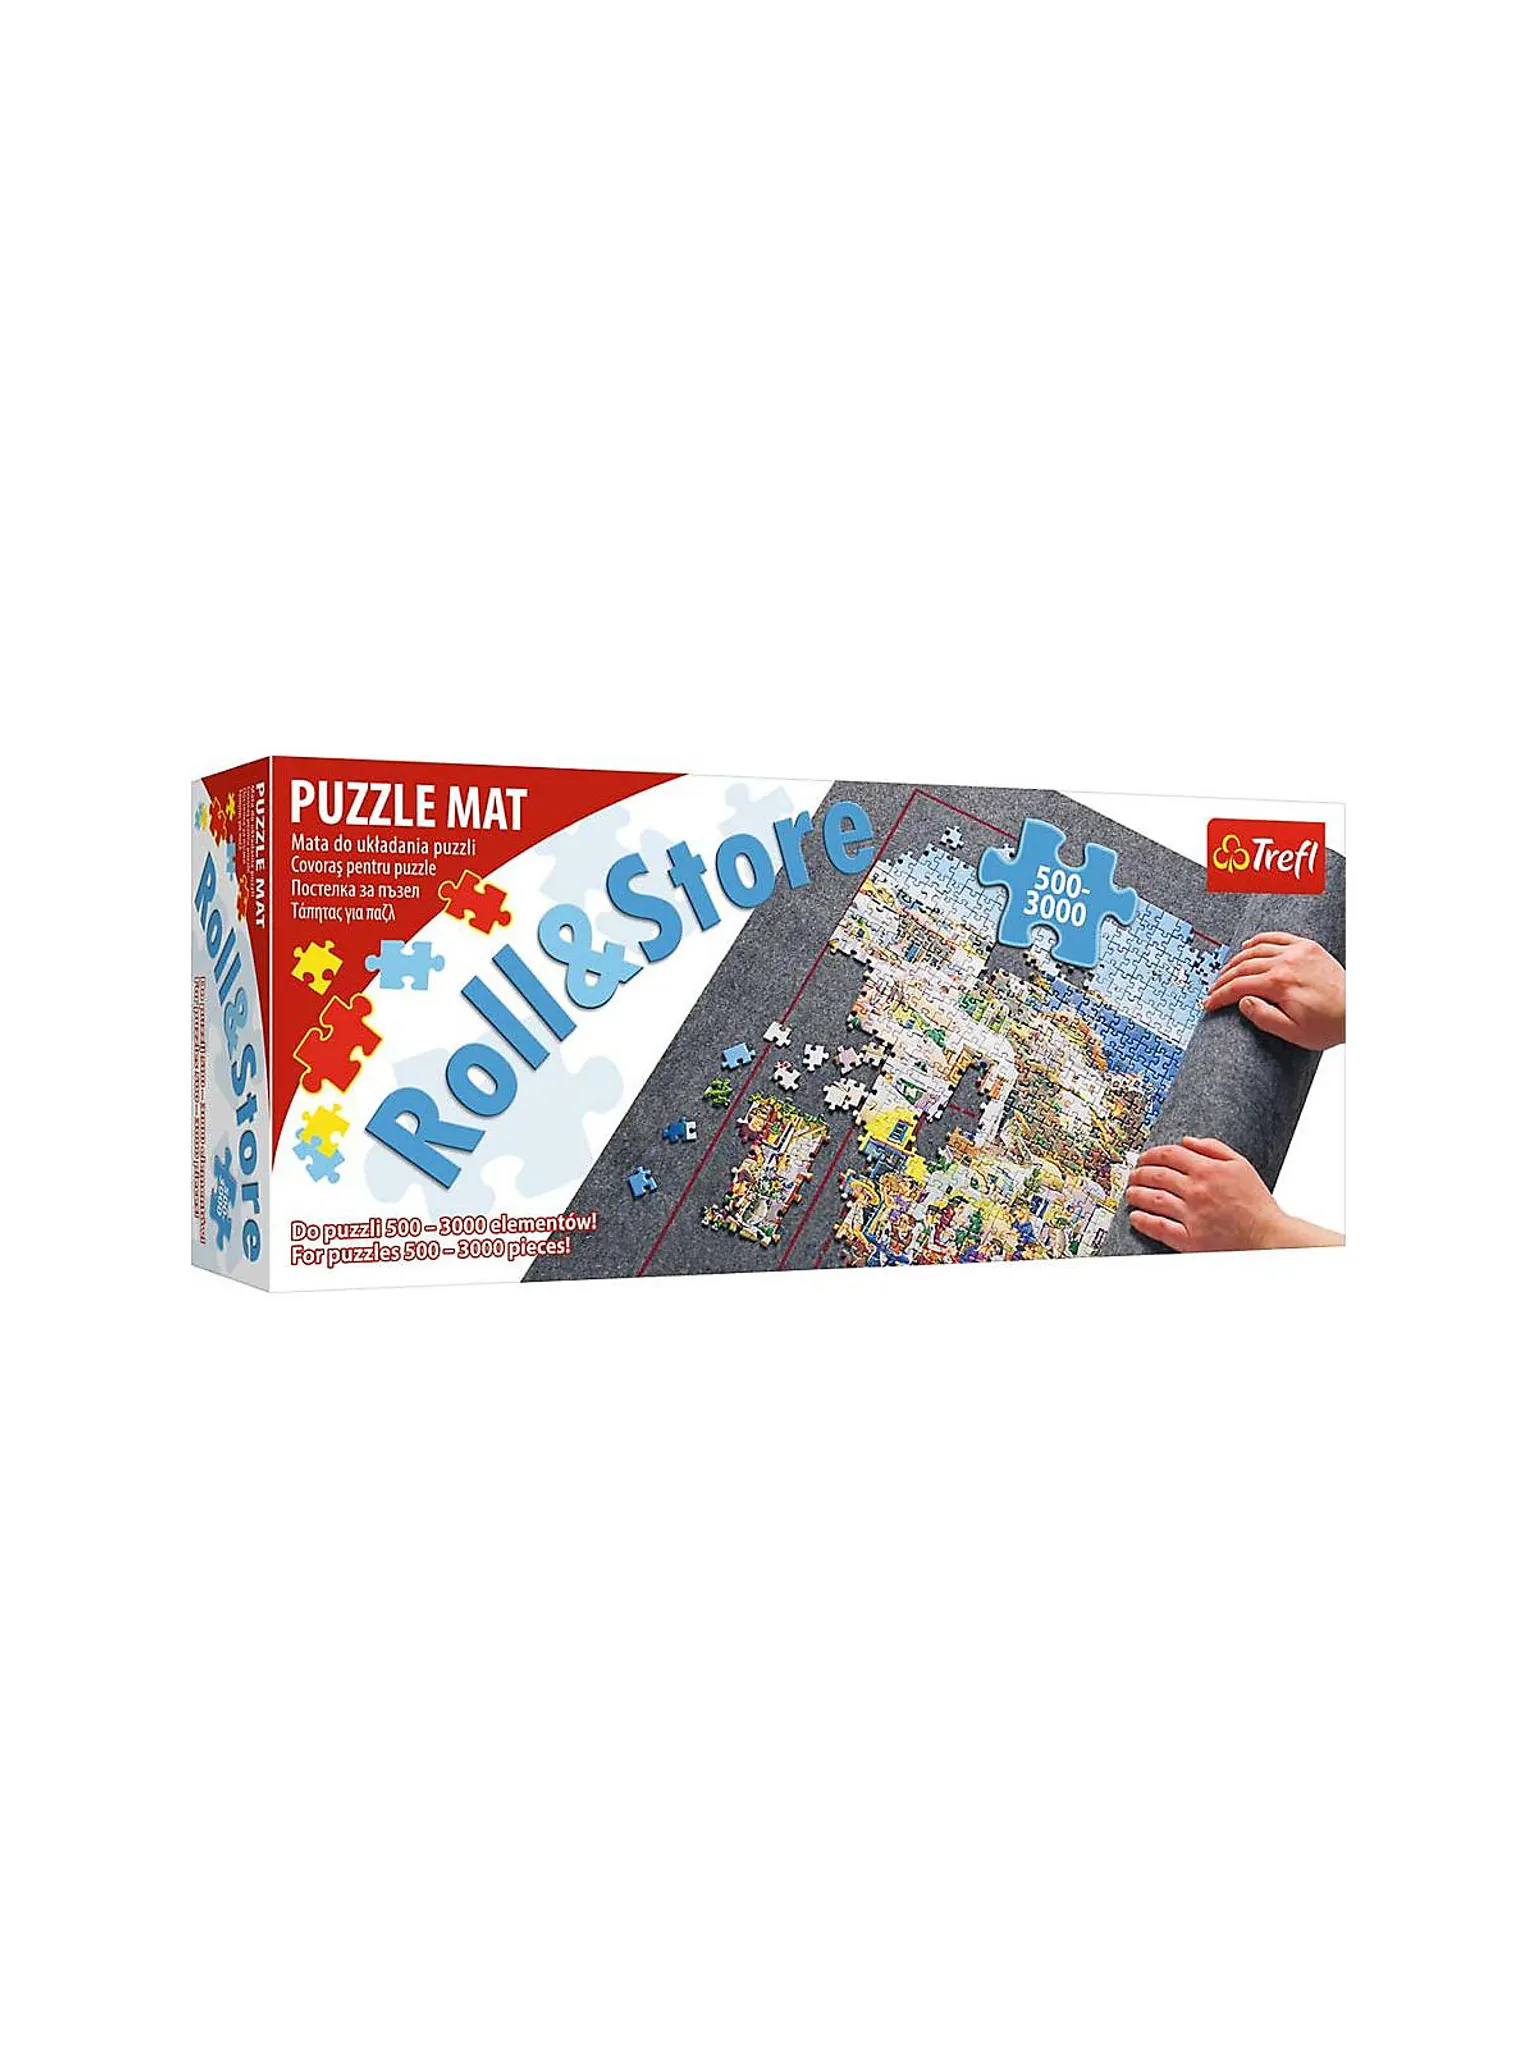 Trefl Spiele & Puzzle Puzzlematte Roll 